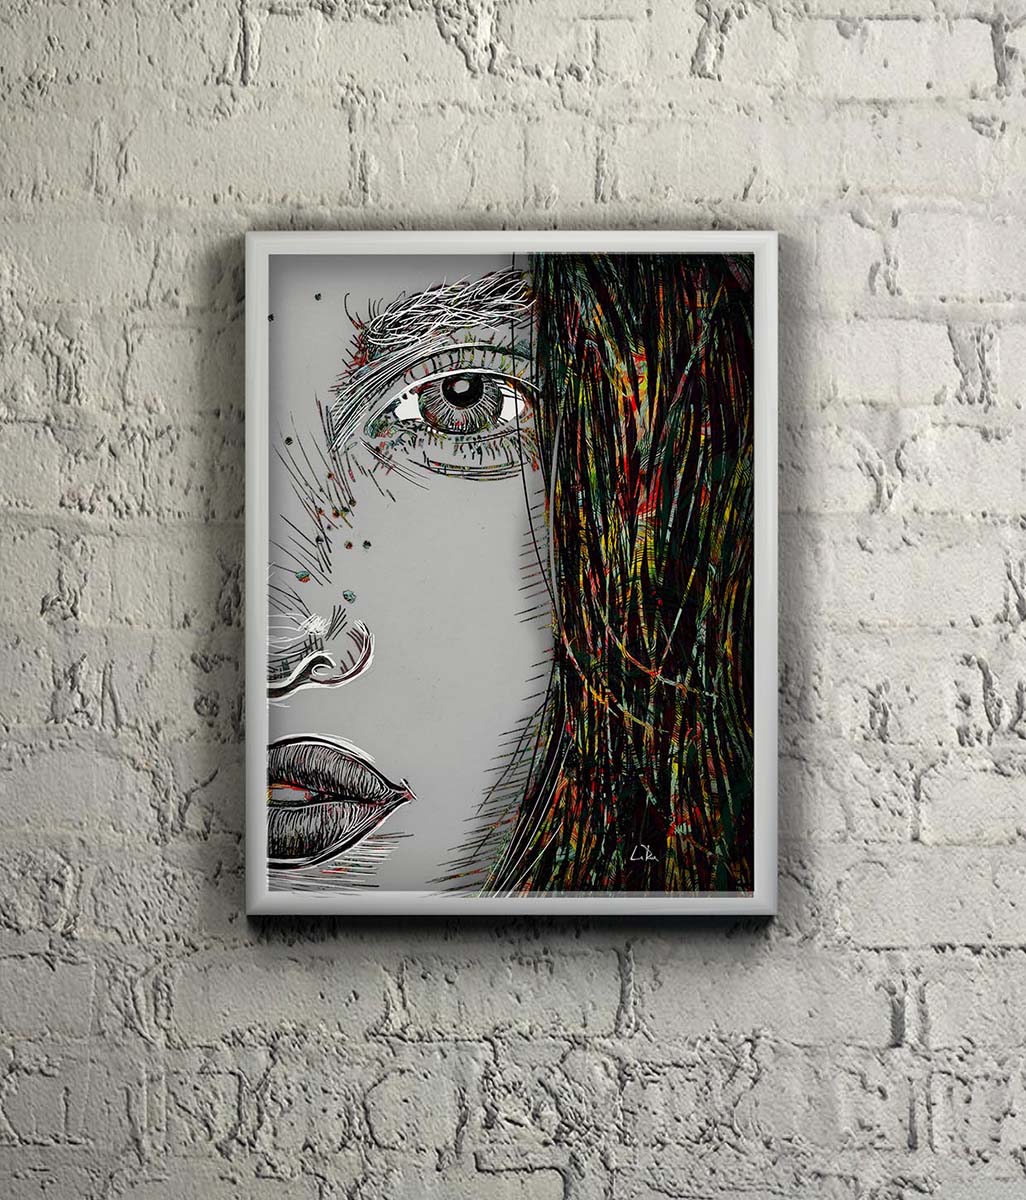 Tara's Eye art by Doug LaRue on a white brick wall